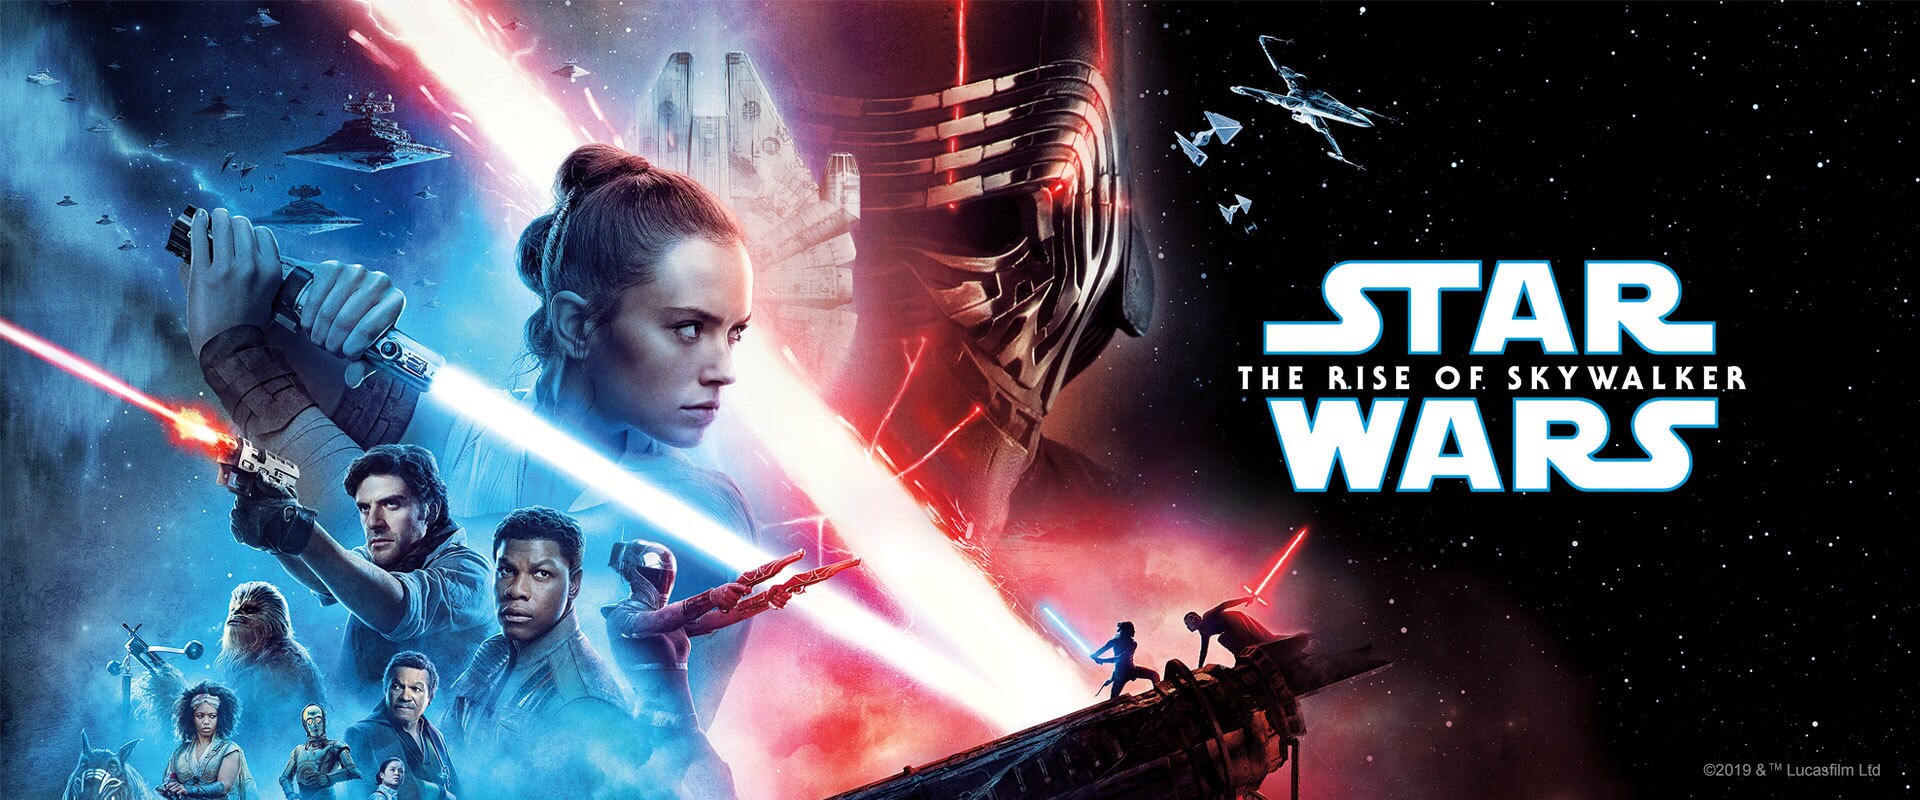 Star Wars Episode IX: The Rise of Luke Skywalker - Banner Hero Object for ATS